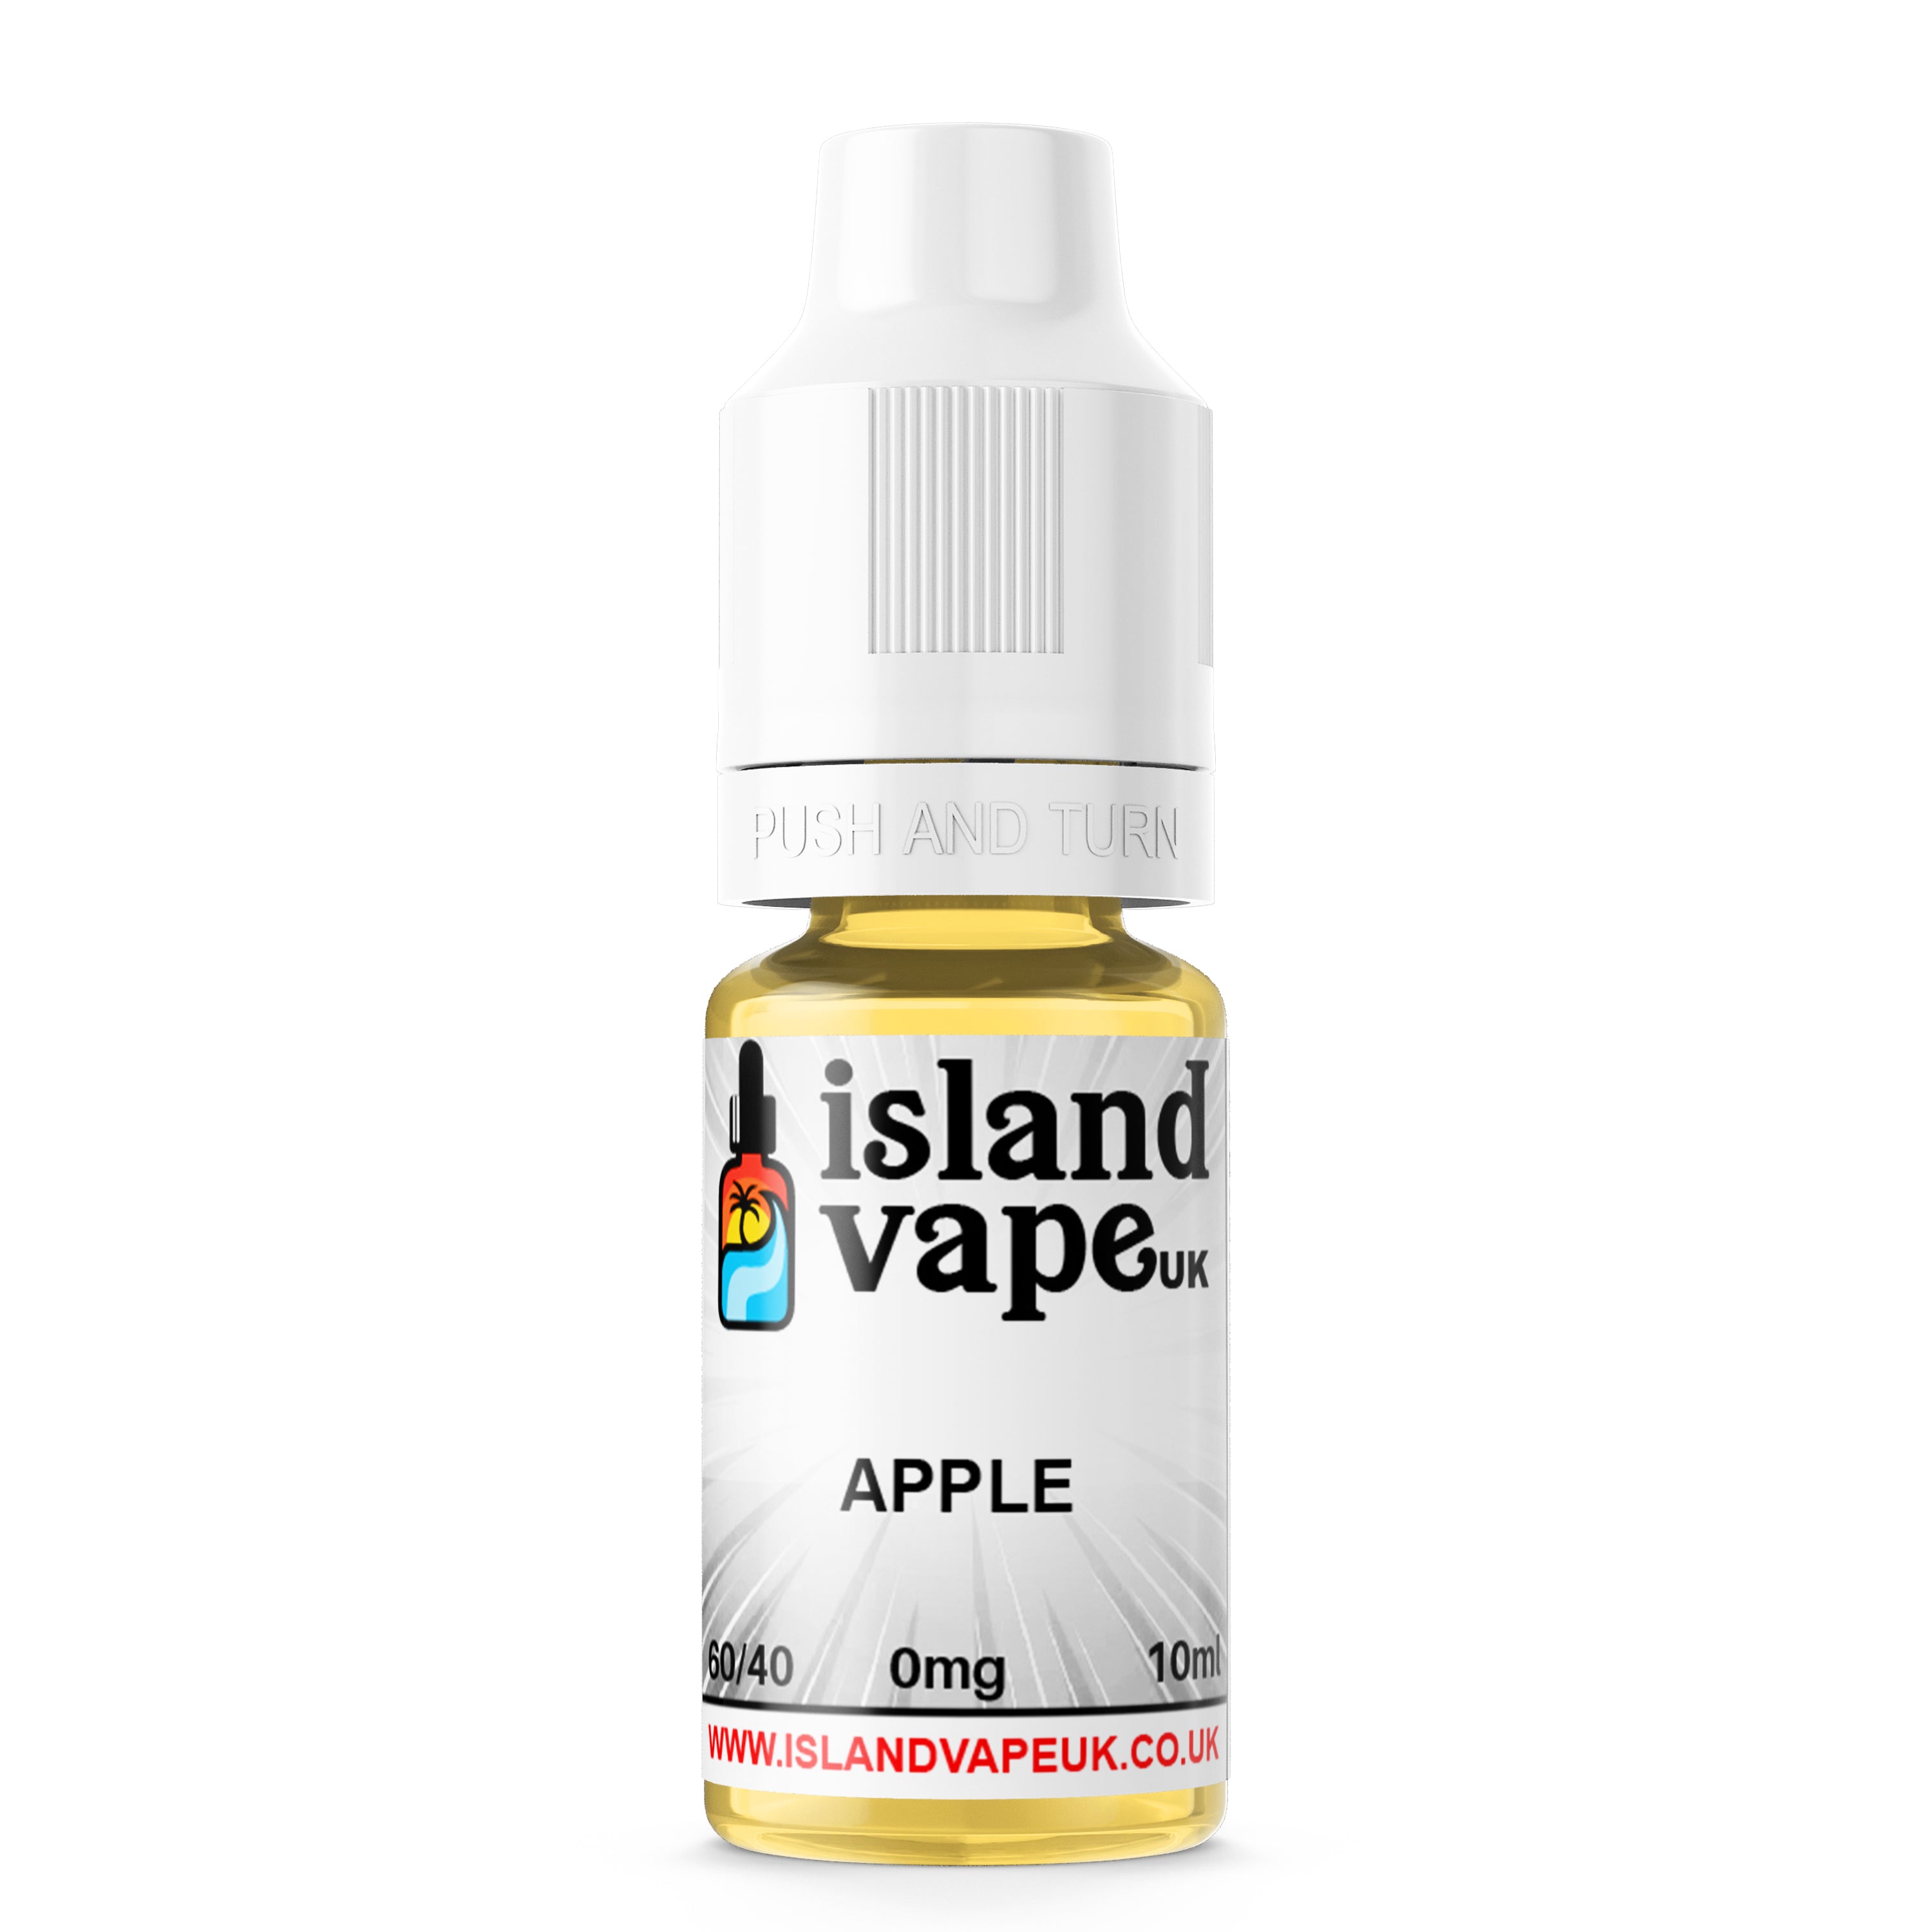 Apple by Island Vape UK